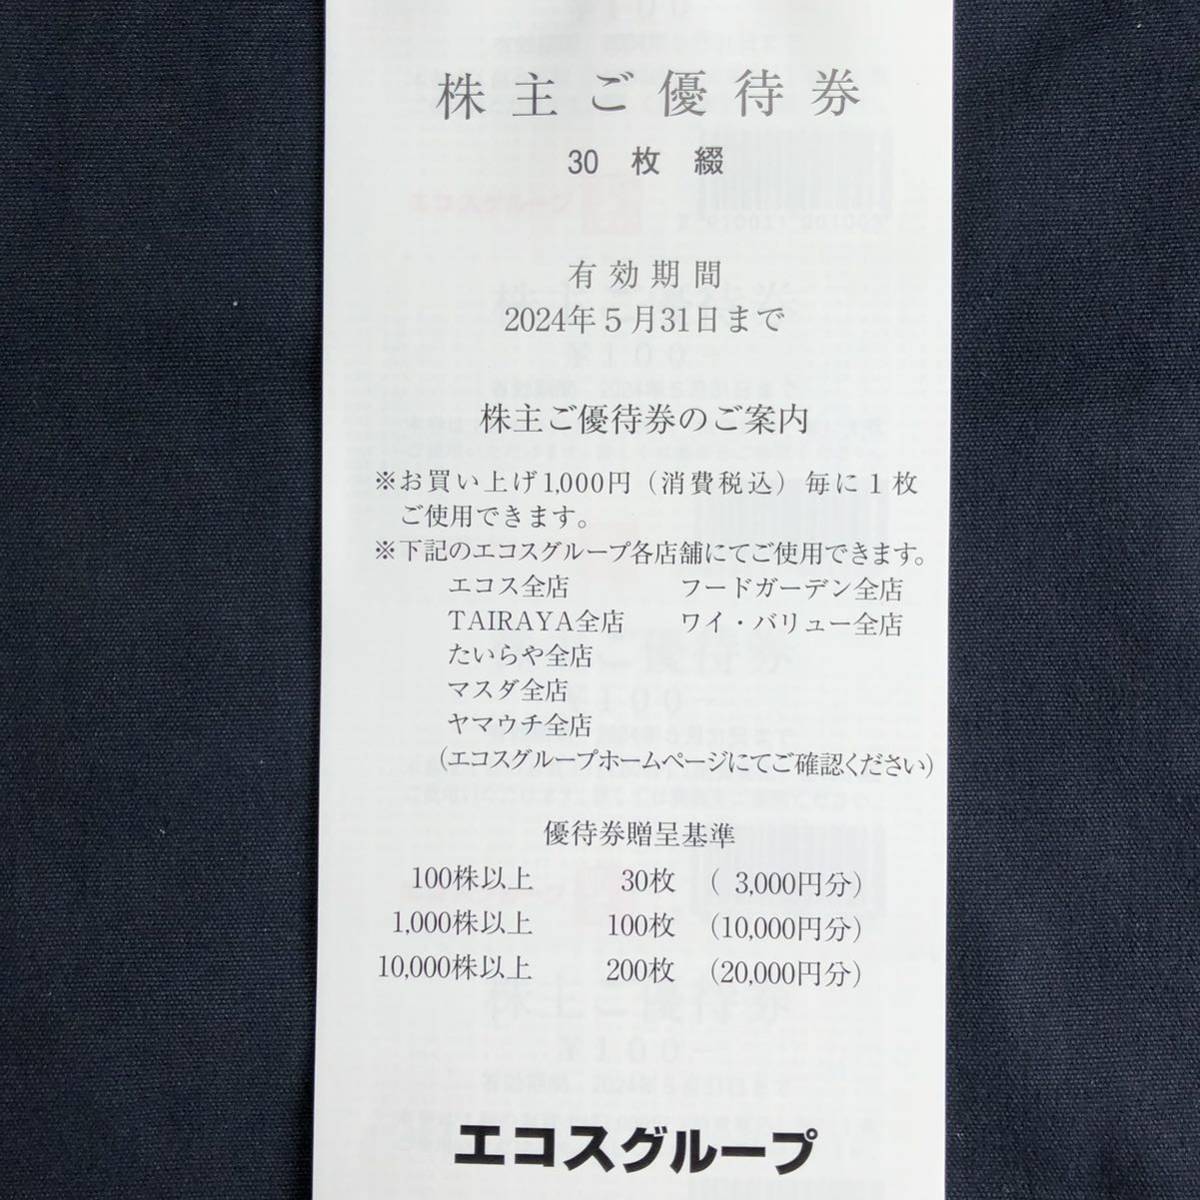 Yahoo!オークション - エコス 株主優待券 3,000円分(100円券×30枚)